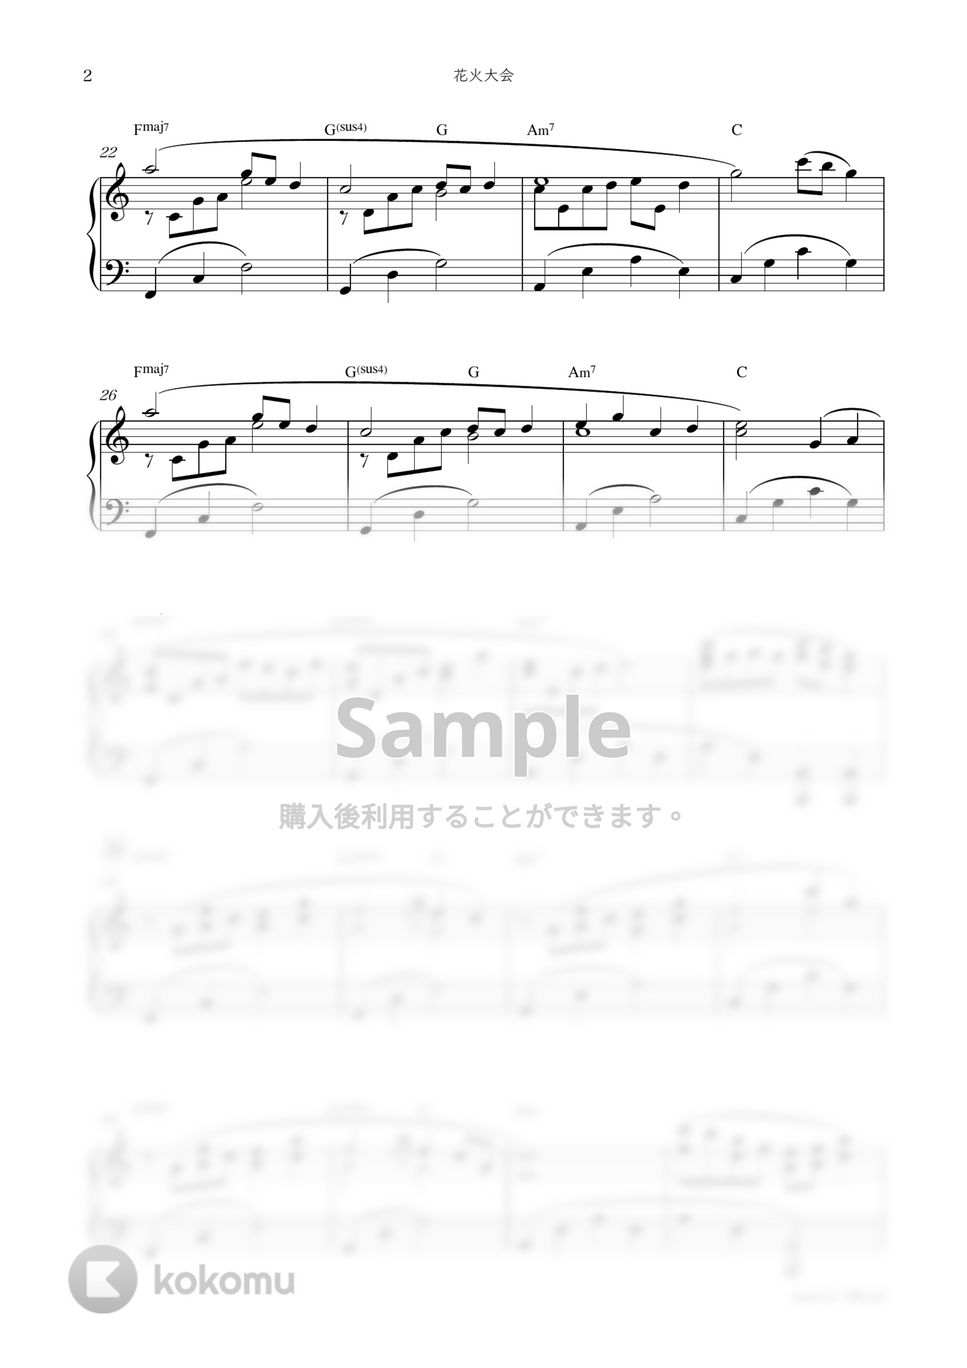 映画『天気の子』OST - 花火大会 by sammy